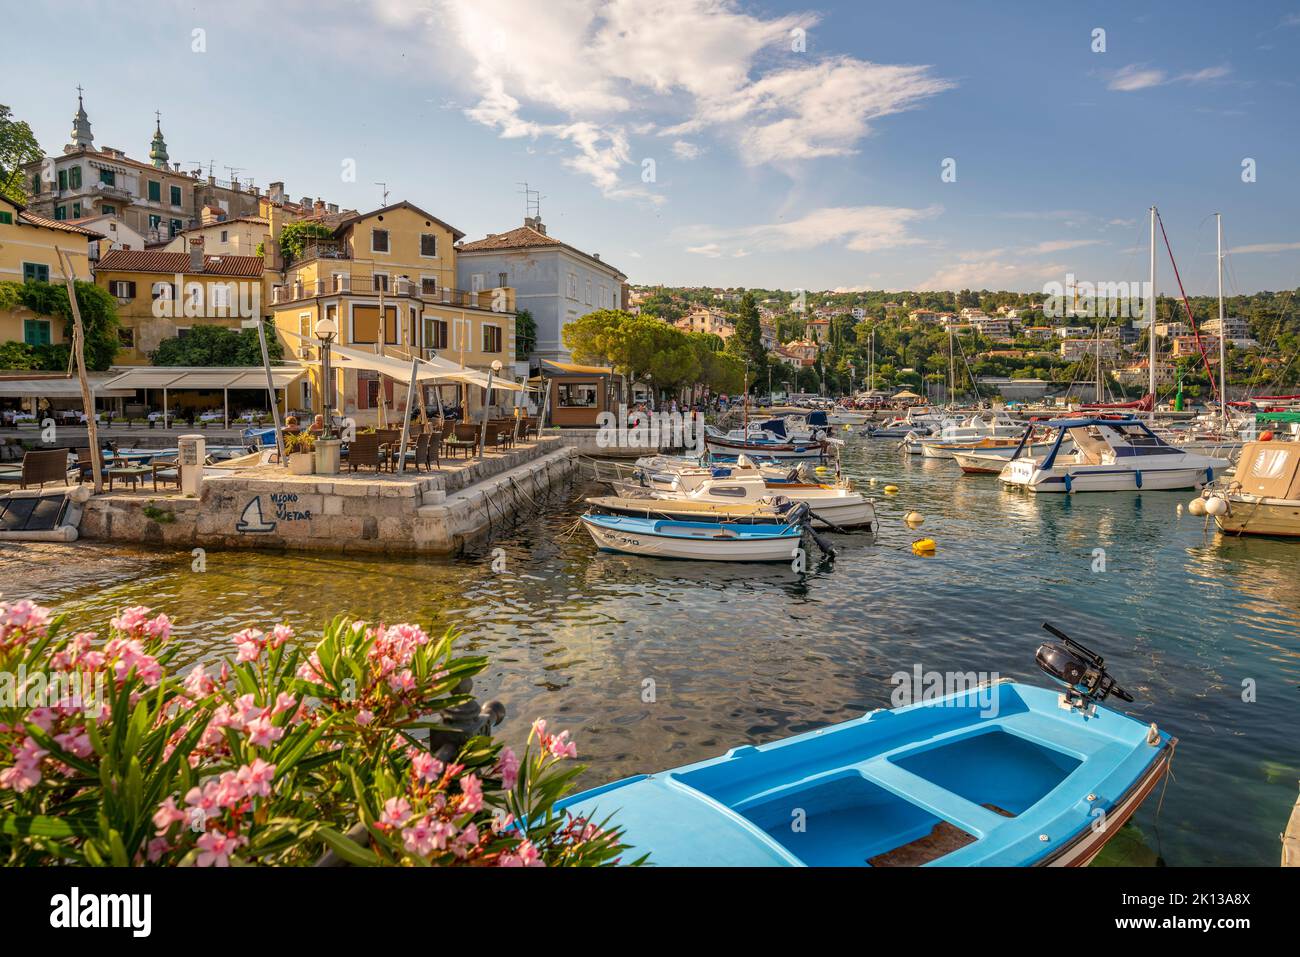 View of boats in the marina and harbourside restaurants during golden hour in Volosko, Opatija, Kvarner Bay, Croatia, Europe Stock Photo